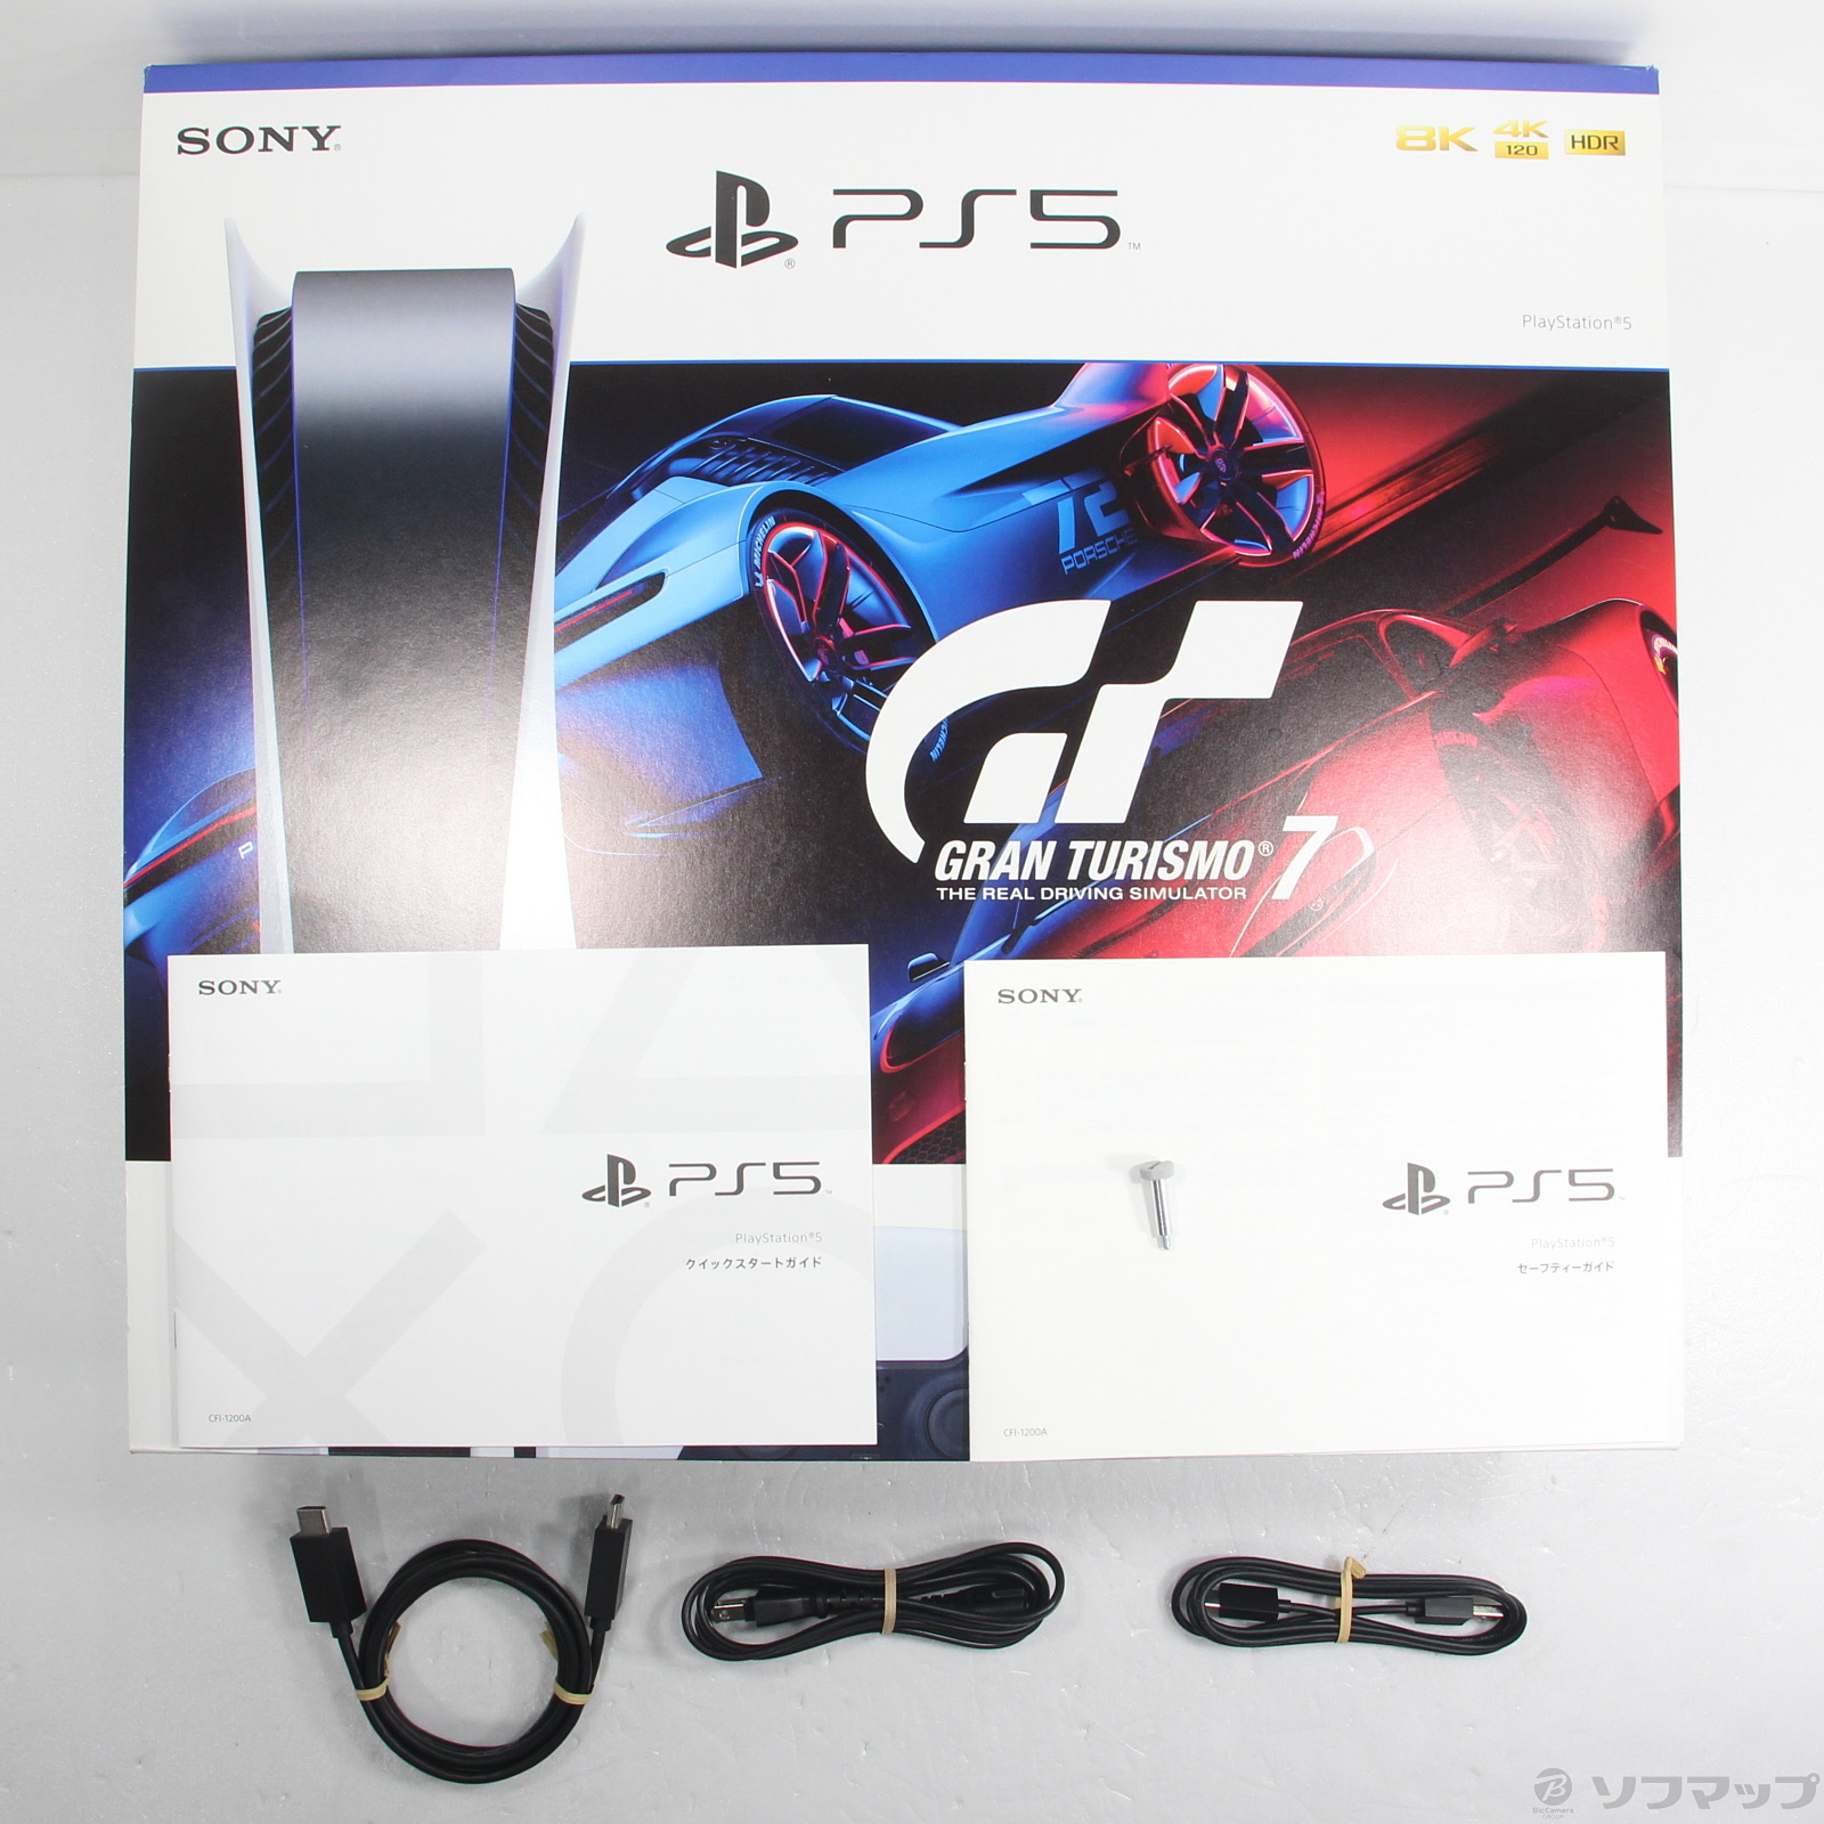 SONY PlayStation5 PS5 プレイステーション5 CFIJ-10002 